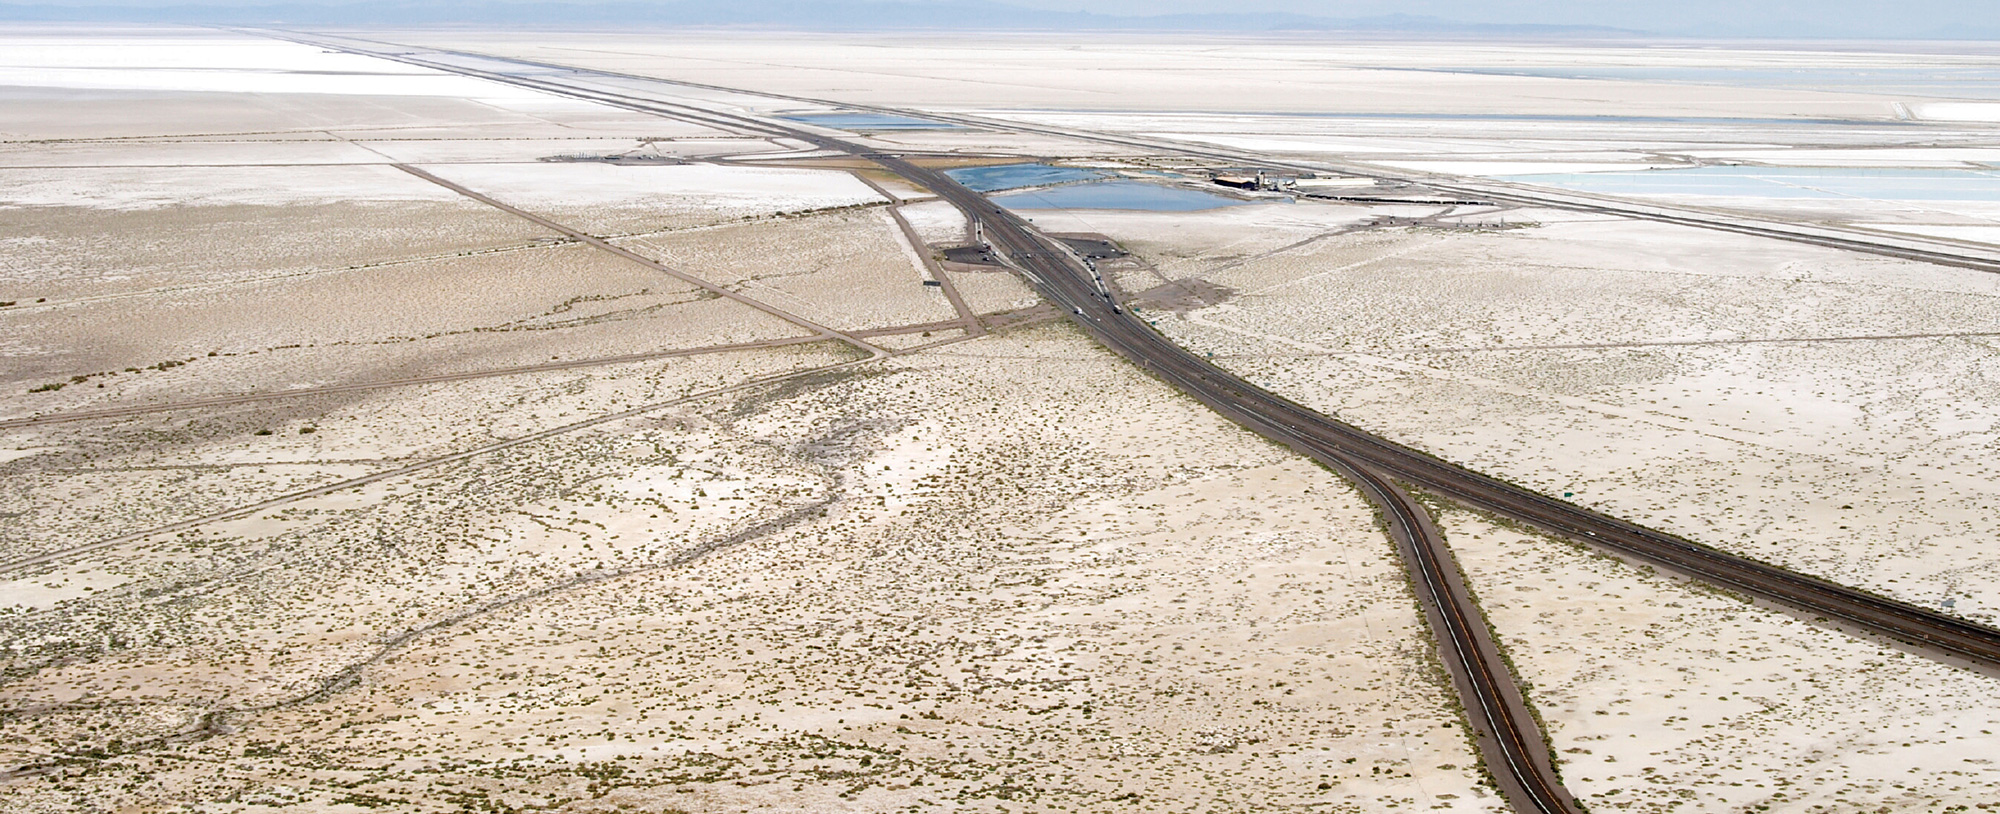 An aerial photograph of roads in a desert landscape.